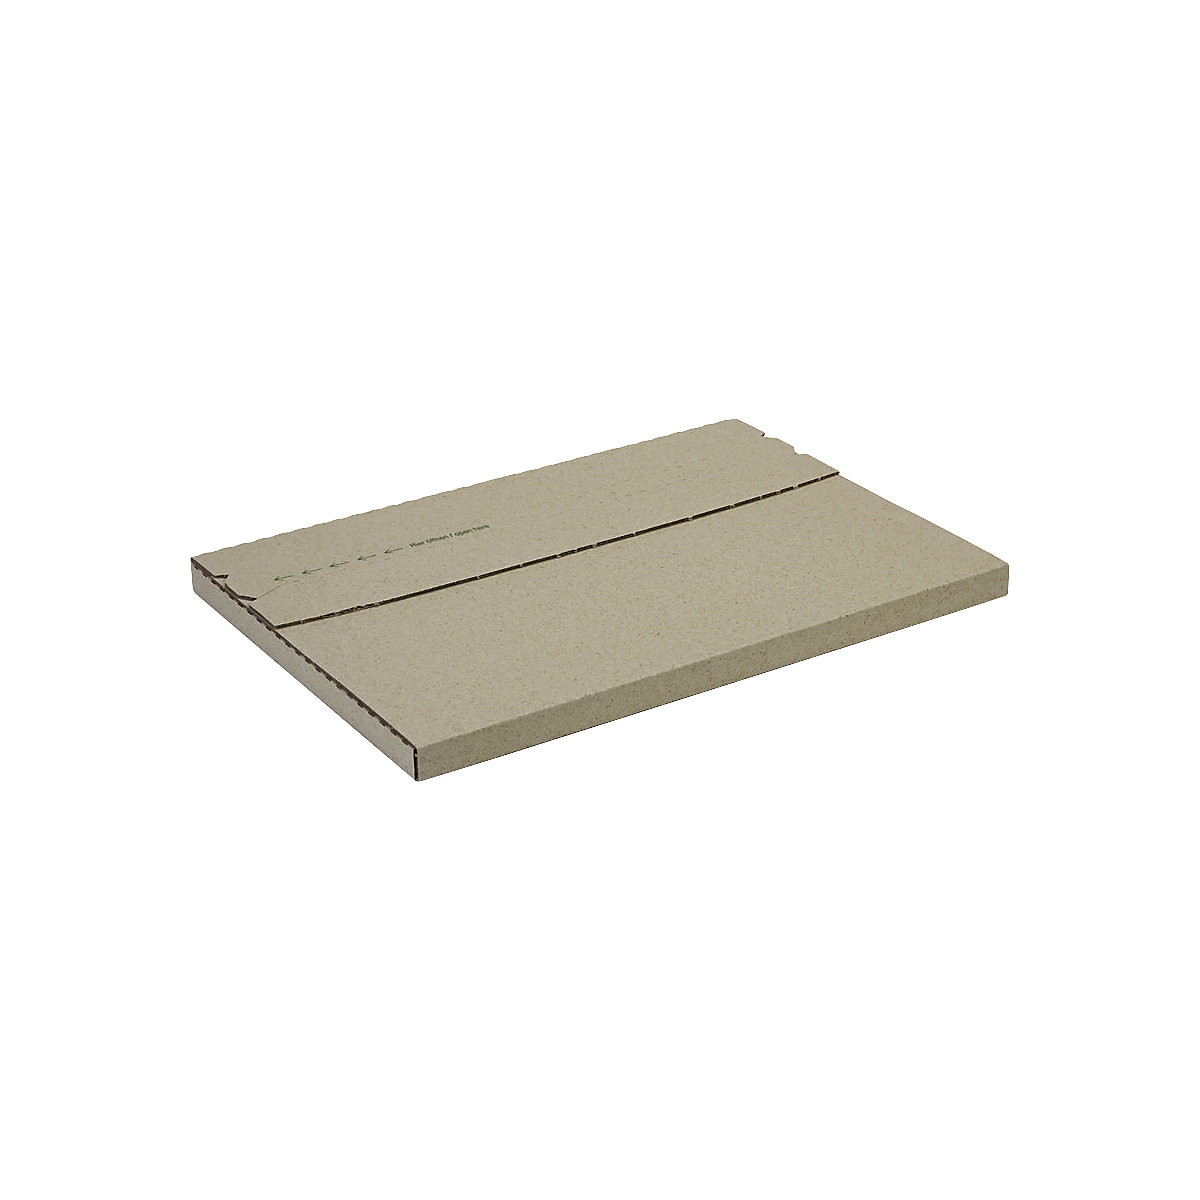 Graspapier-Flachpack terra, selbstklebend, Innen-LxBxH 314 x 225 x 13 mm, ab 200 Stk-1